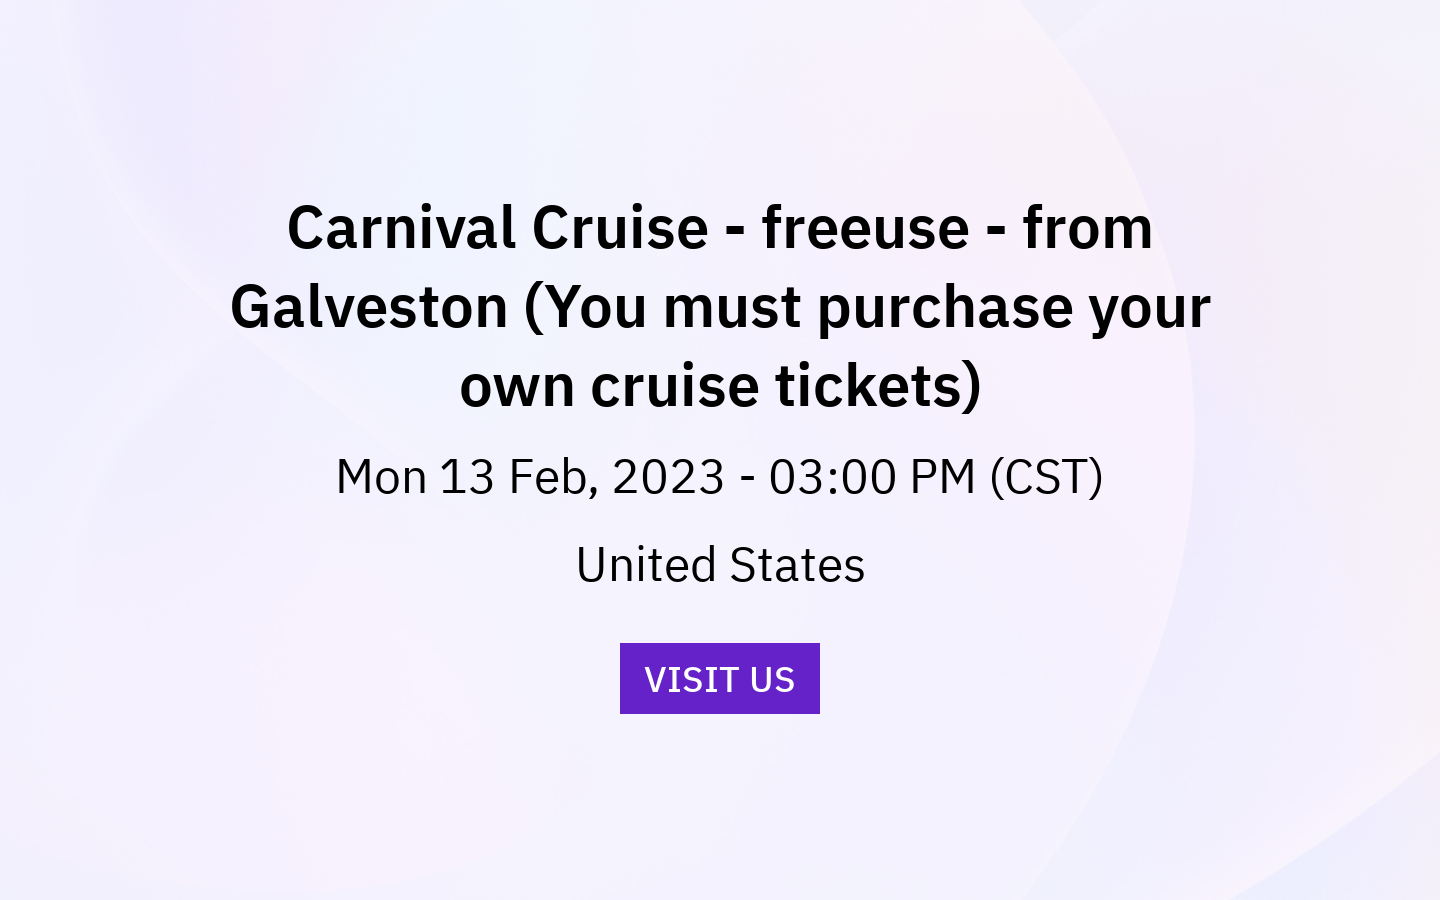 cruise tickets galveston